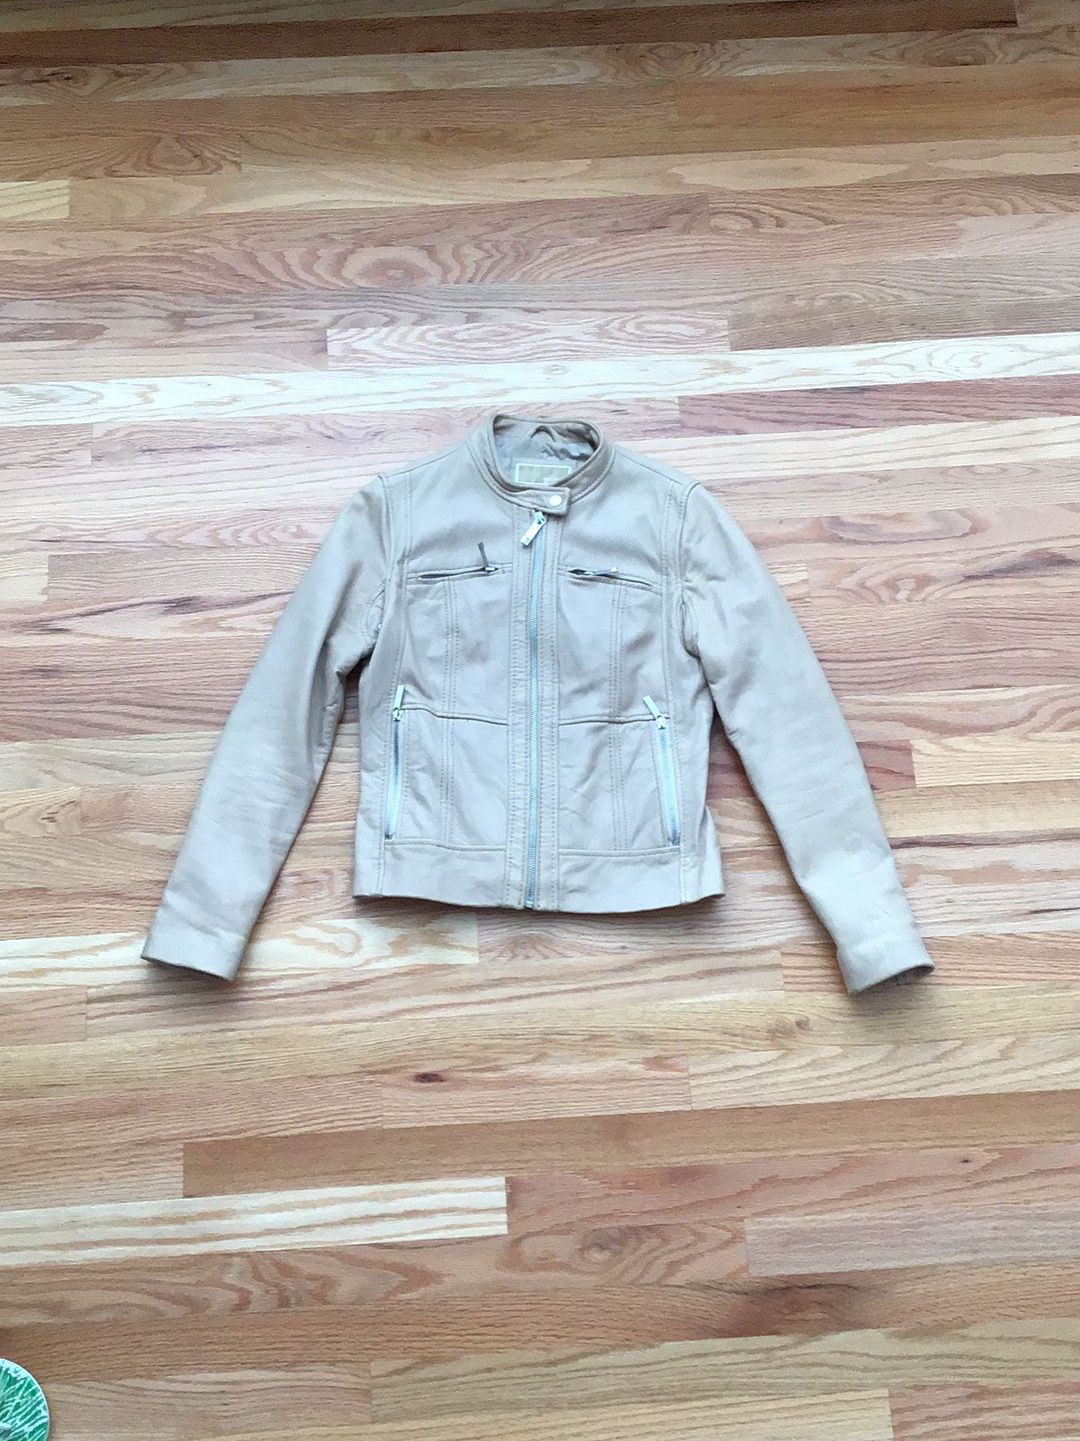 Authentic Michael Kors Leather Jacket Size S